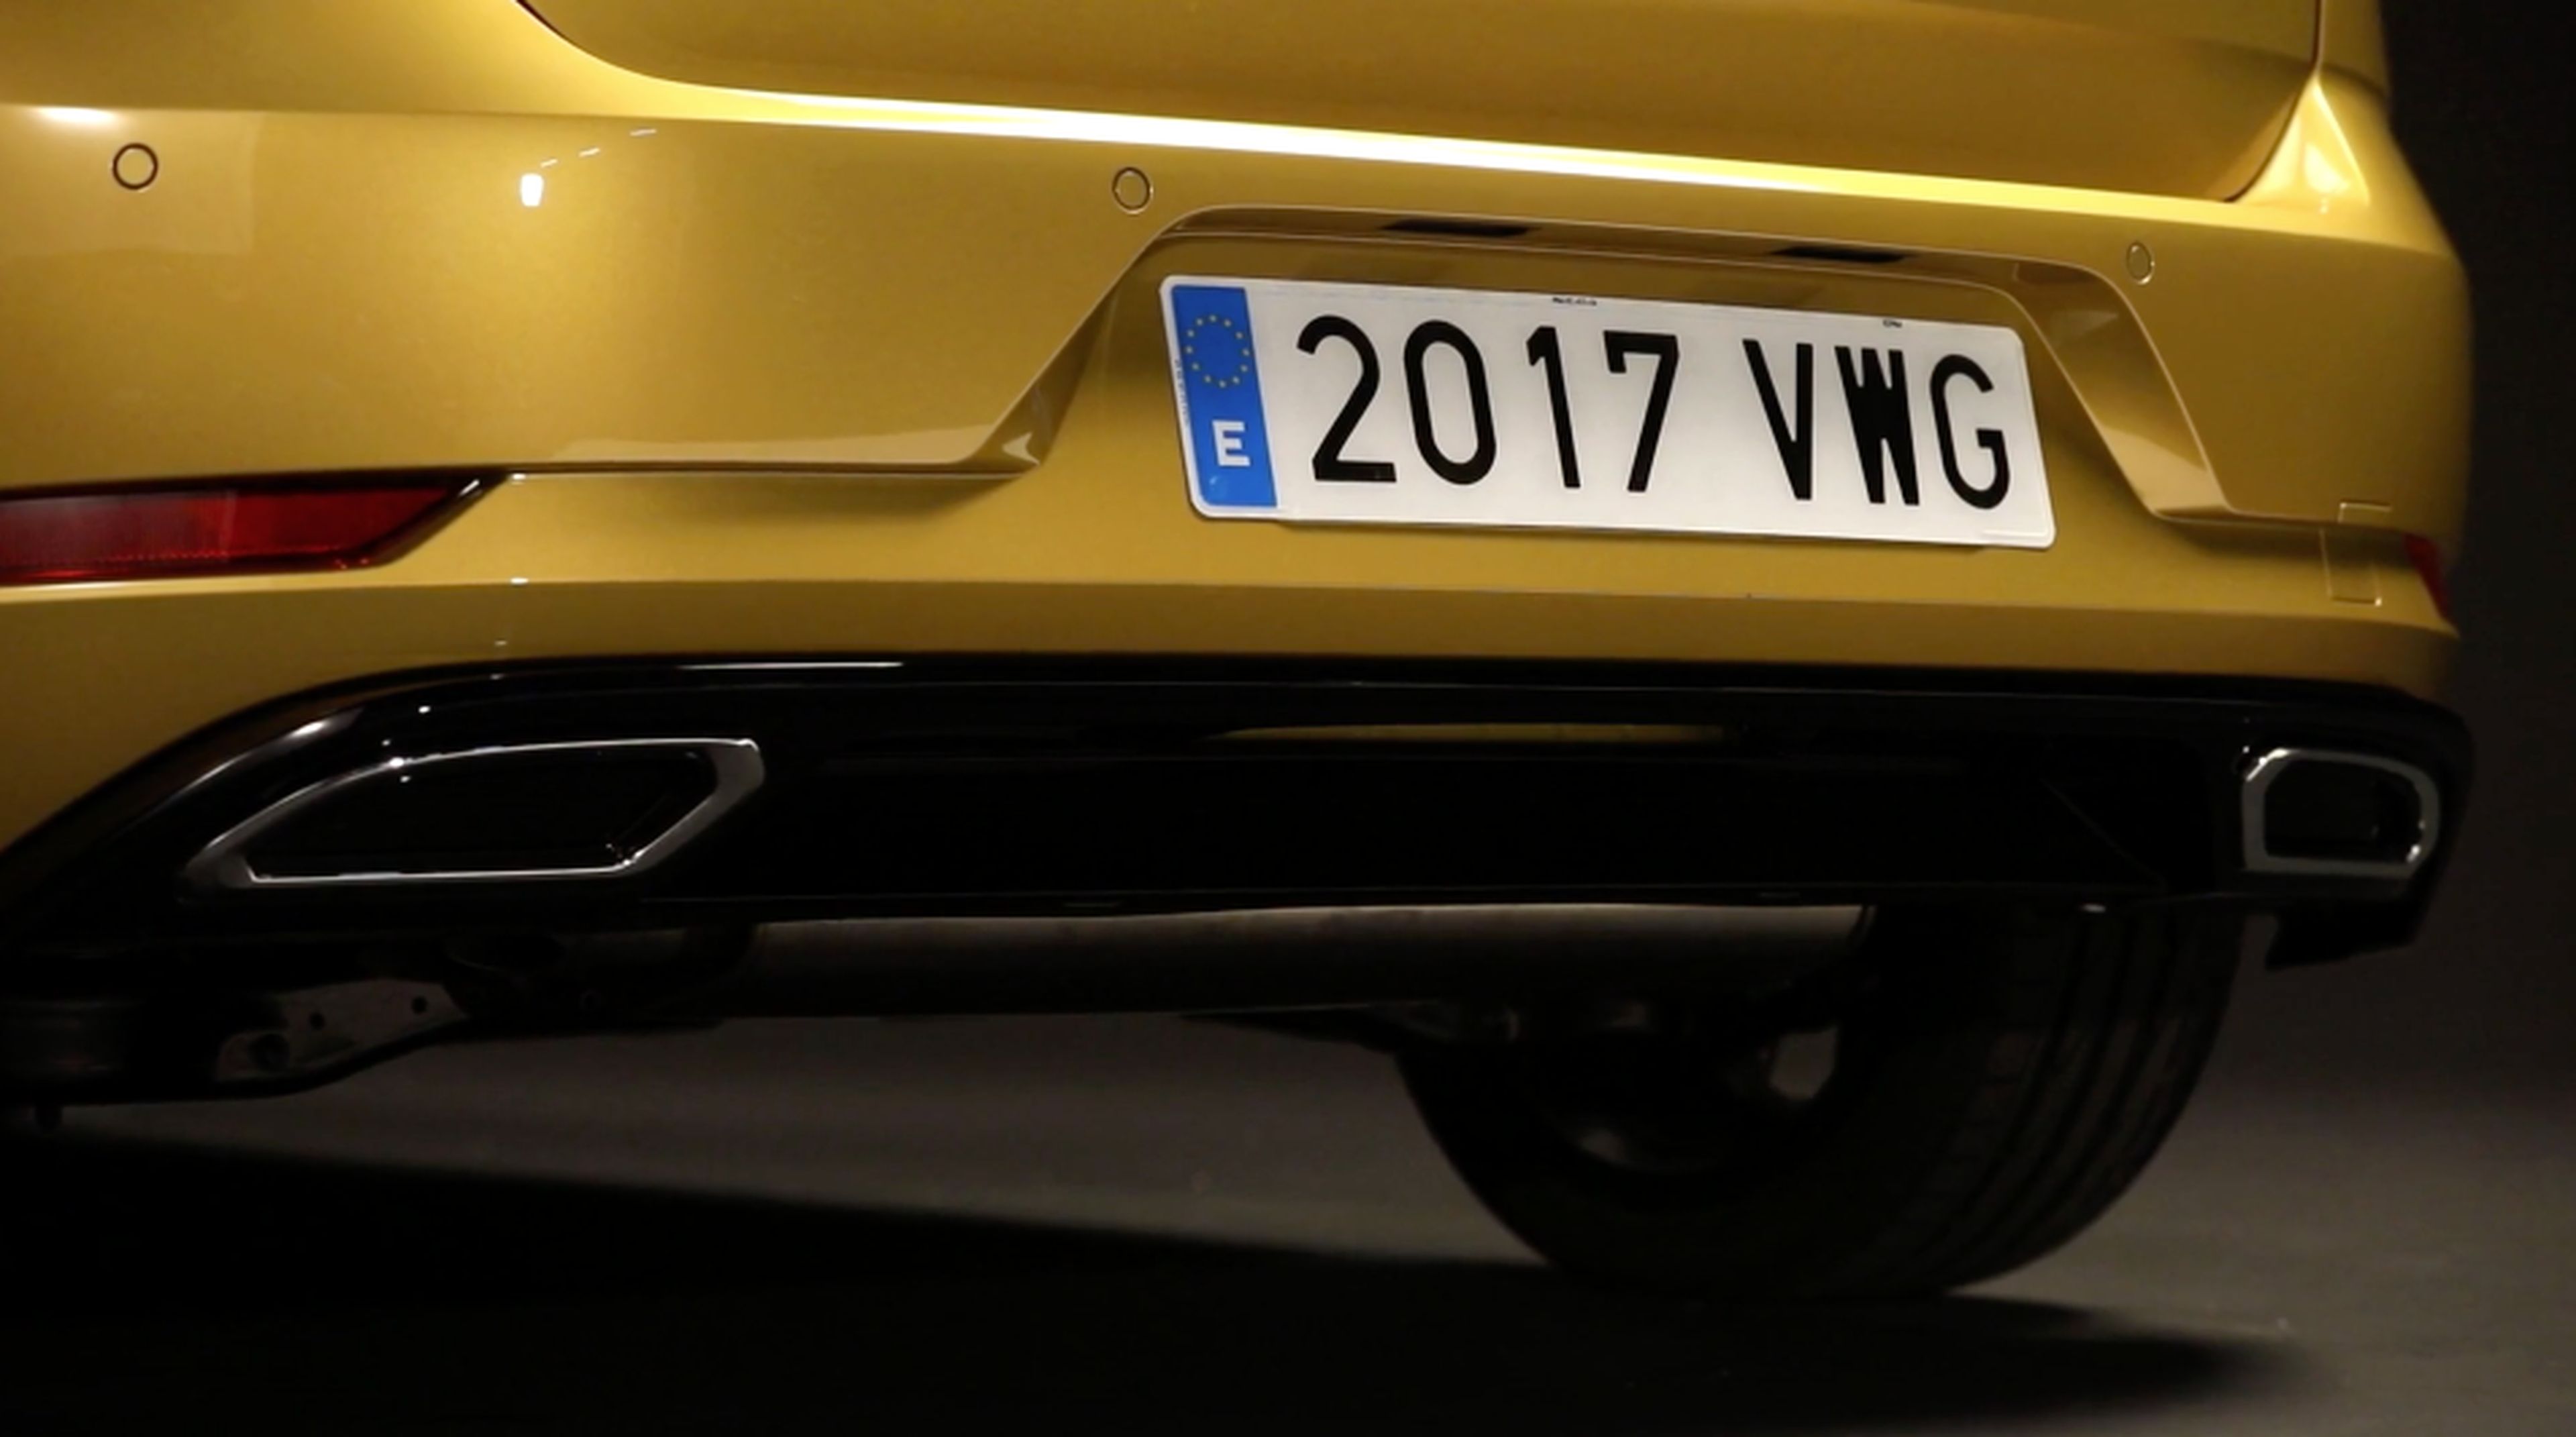 5 detalles del nuevo VW Golf que no pasarán desapercibidos